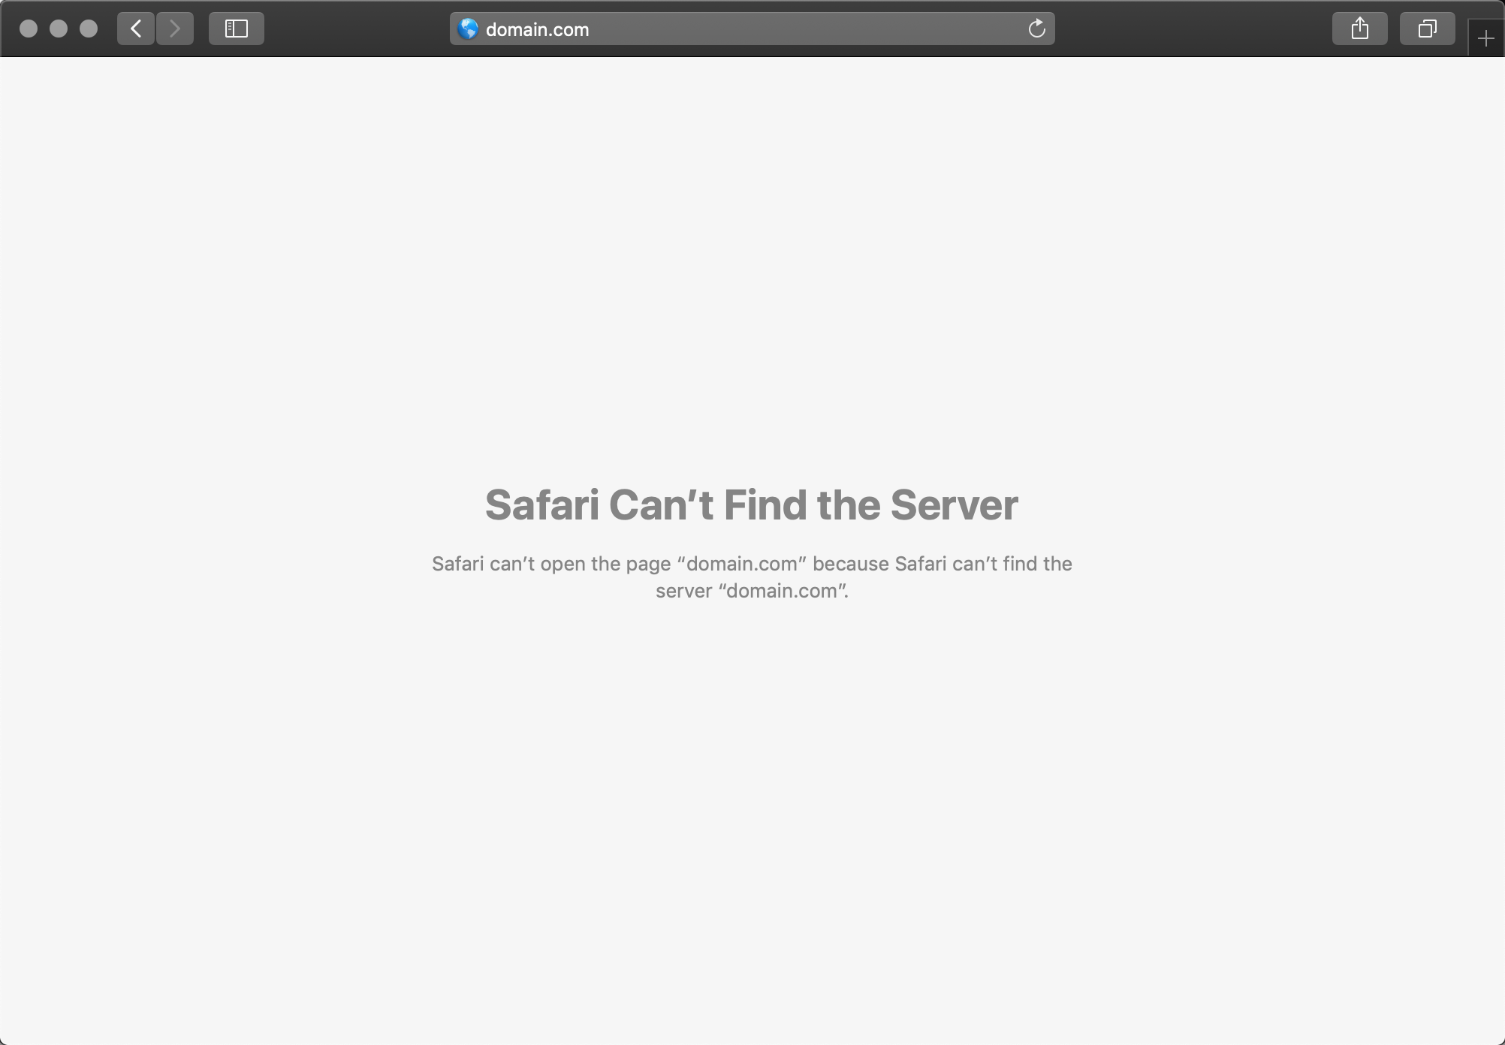 DNS_PROBE_FINISHED_NXDOMAIN error message returned in Safari